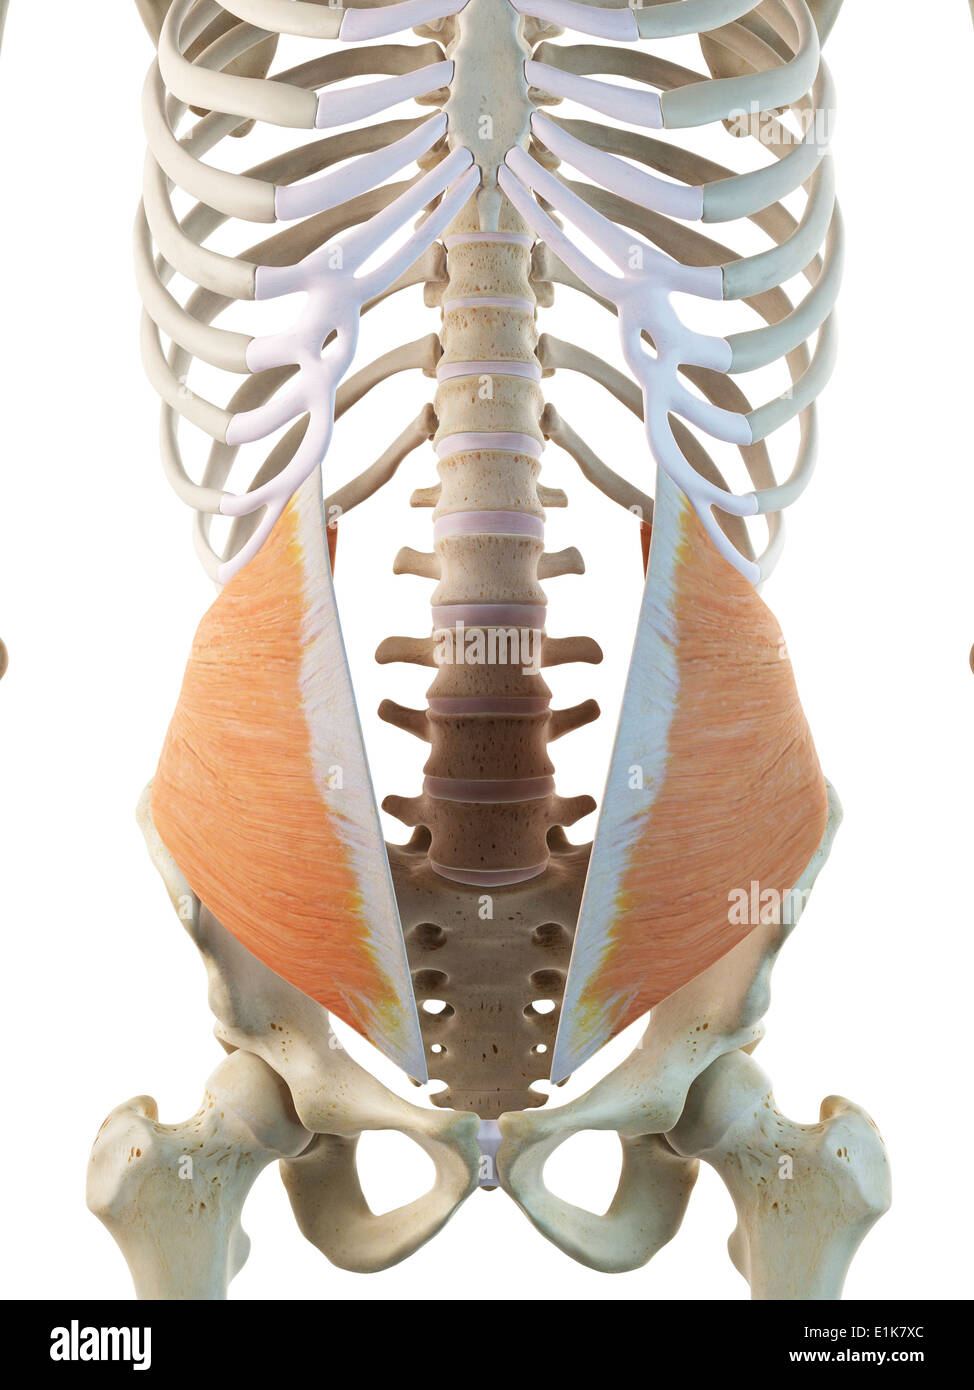 Human external oblique abdominal muscle computer artwork. Stock Photo